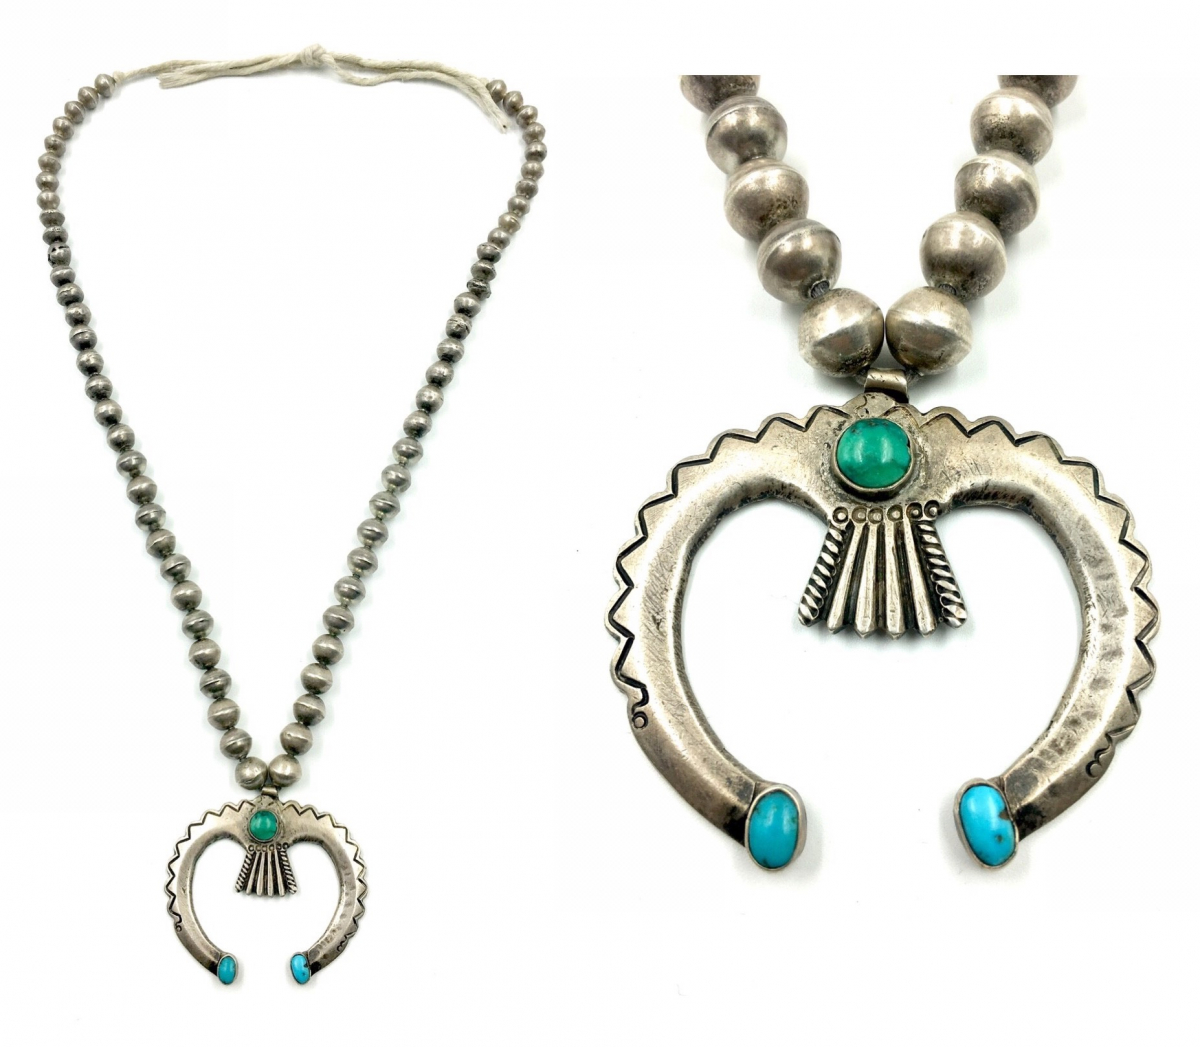 circa 1910-20 silver and turquoise naja